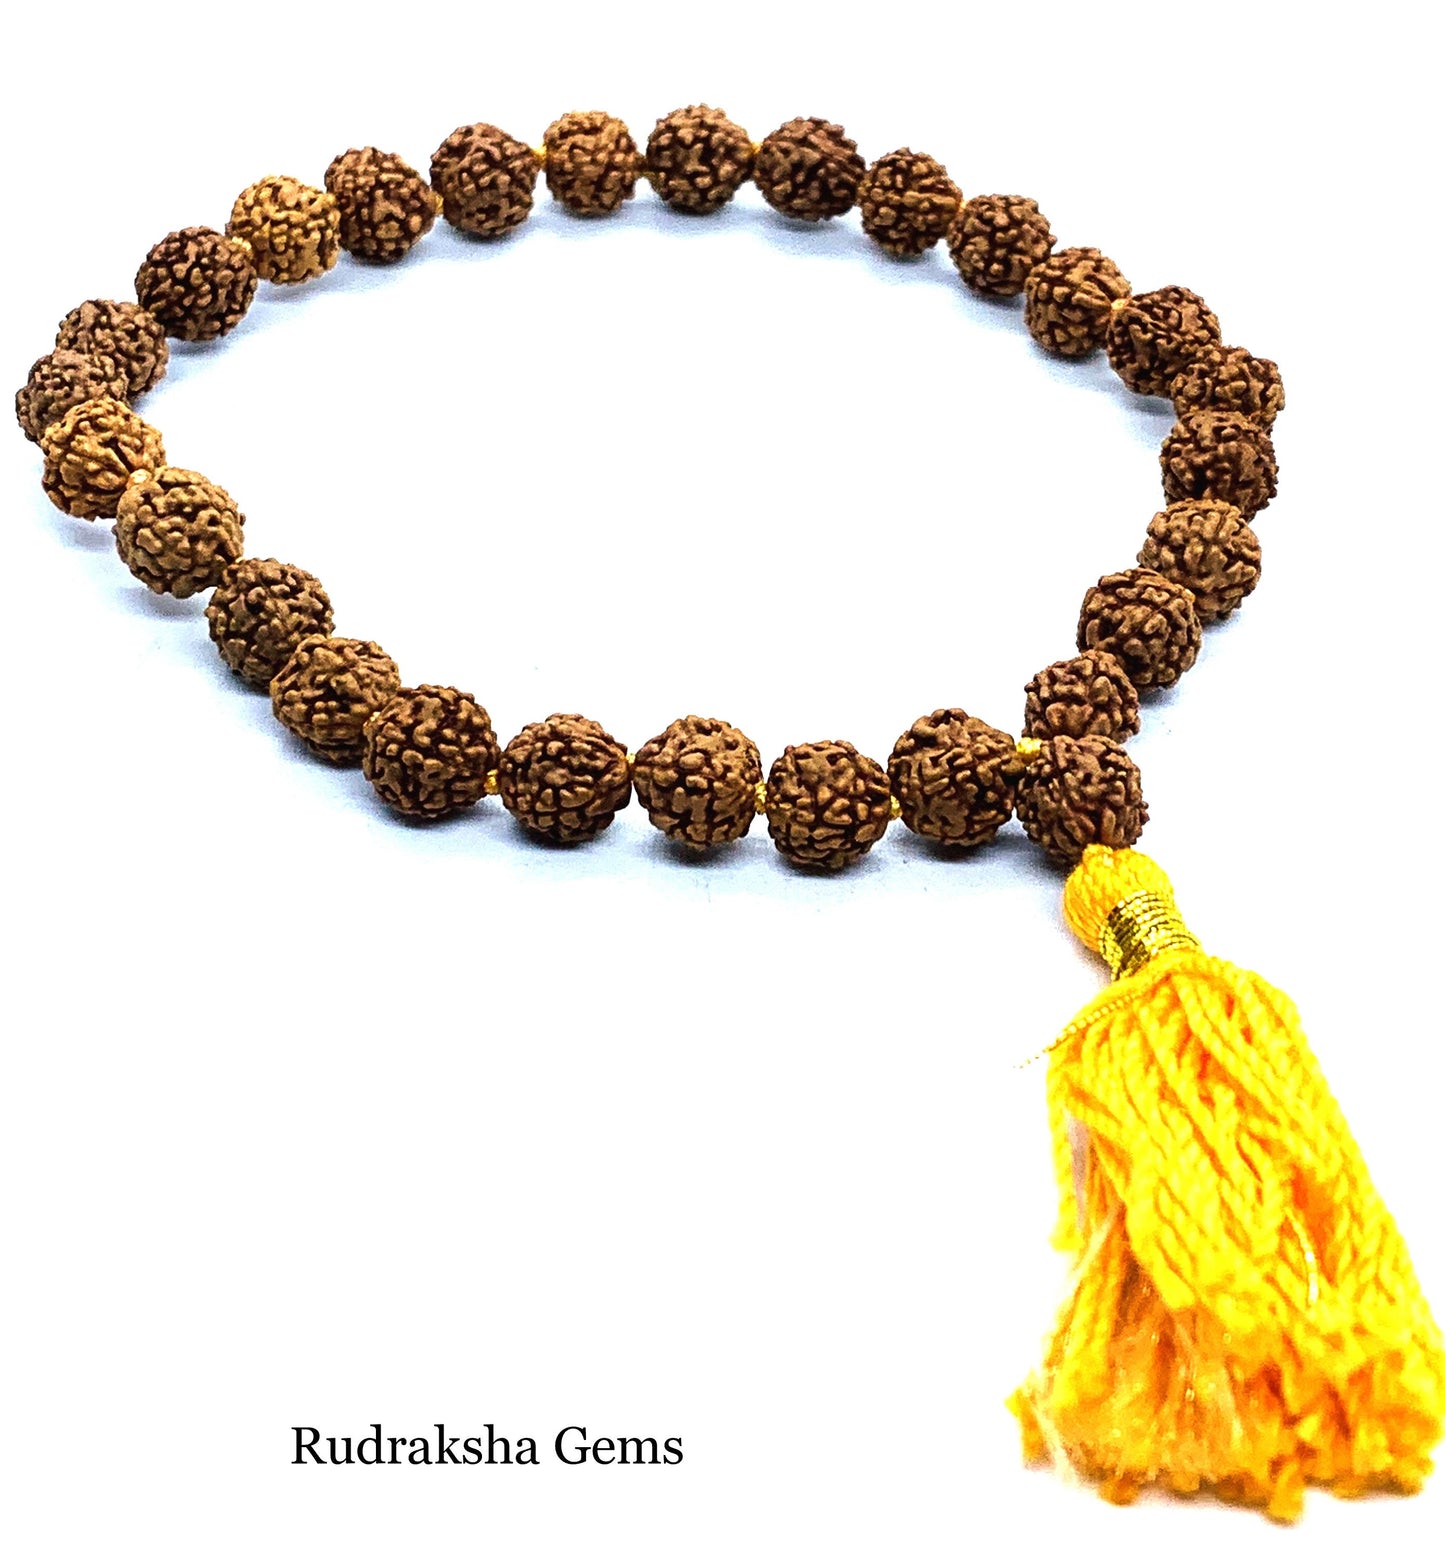 Rudraksha knotted Bracelet- Rudraksha Beads Handmade 27+1 Bracelet Wristband Meditation Yoga lord Shiva Bracelet, Wrist Knotted Yoga Mala